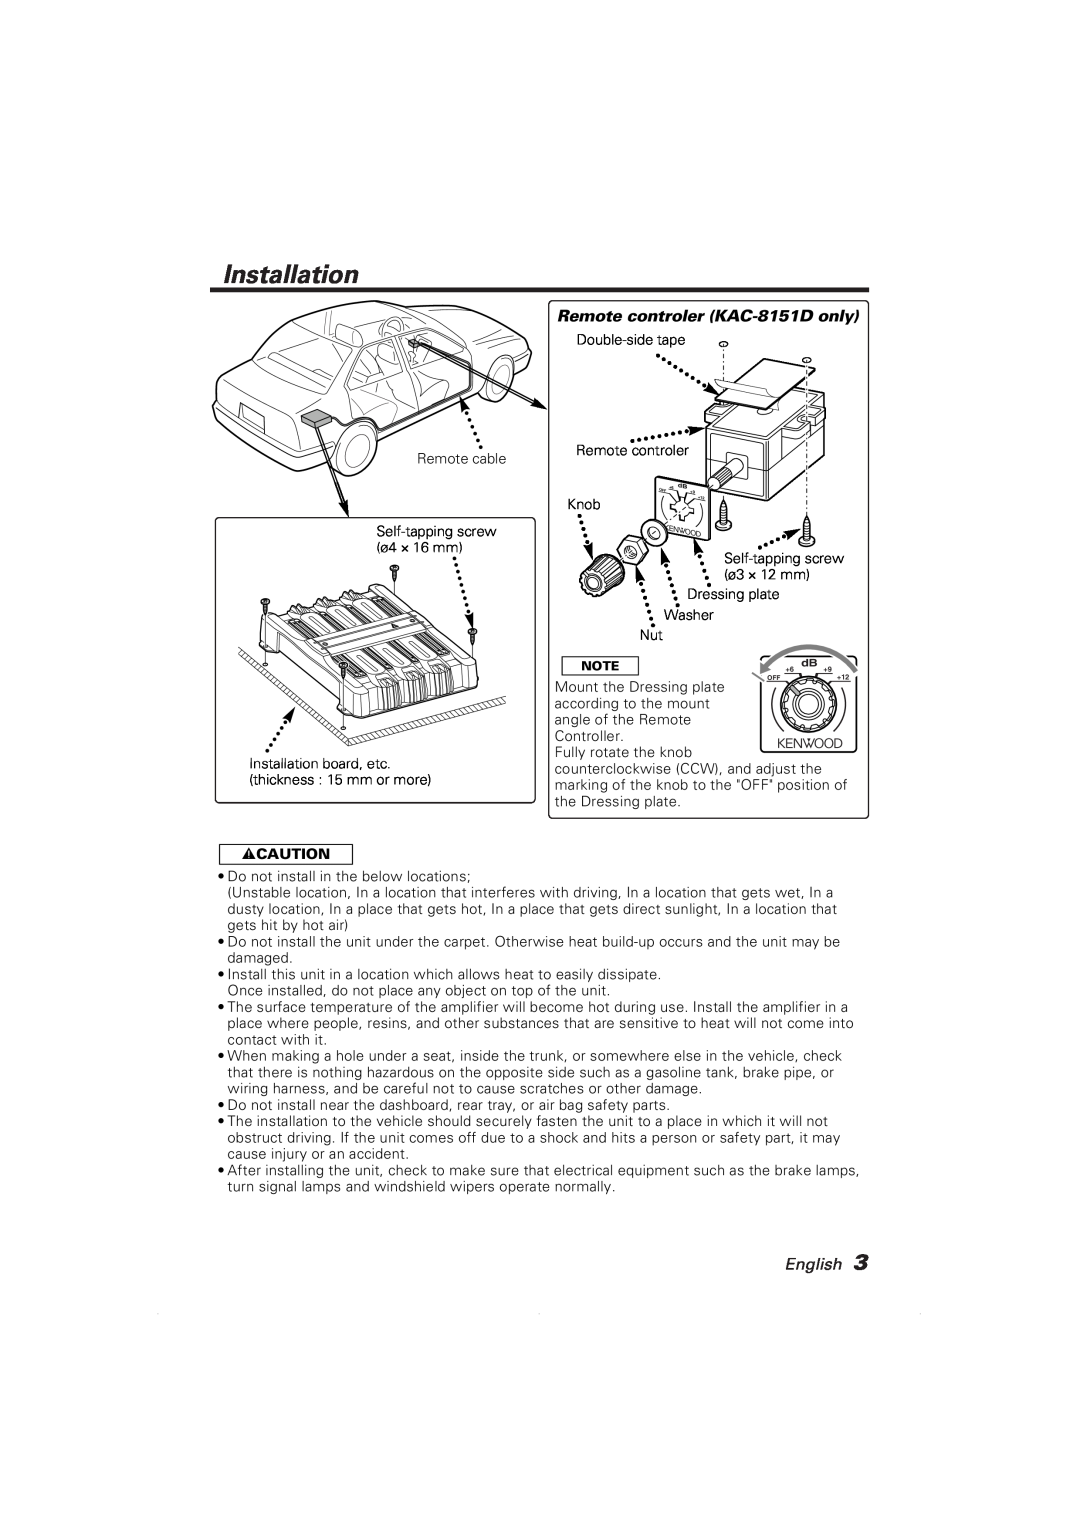 Kenwood KAC-8101D instruction manual Installation, Remote controler KAC-8151Donly, English, 2CAUTION 